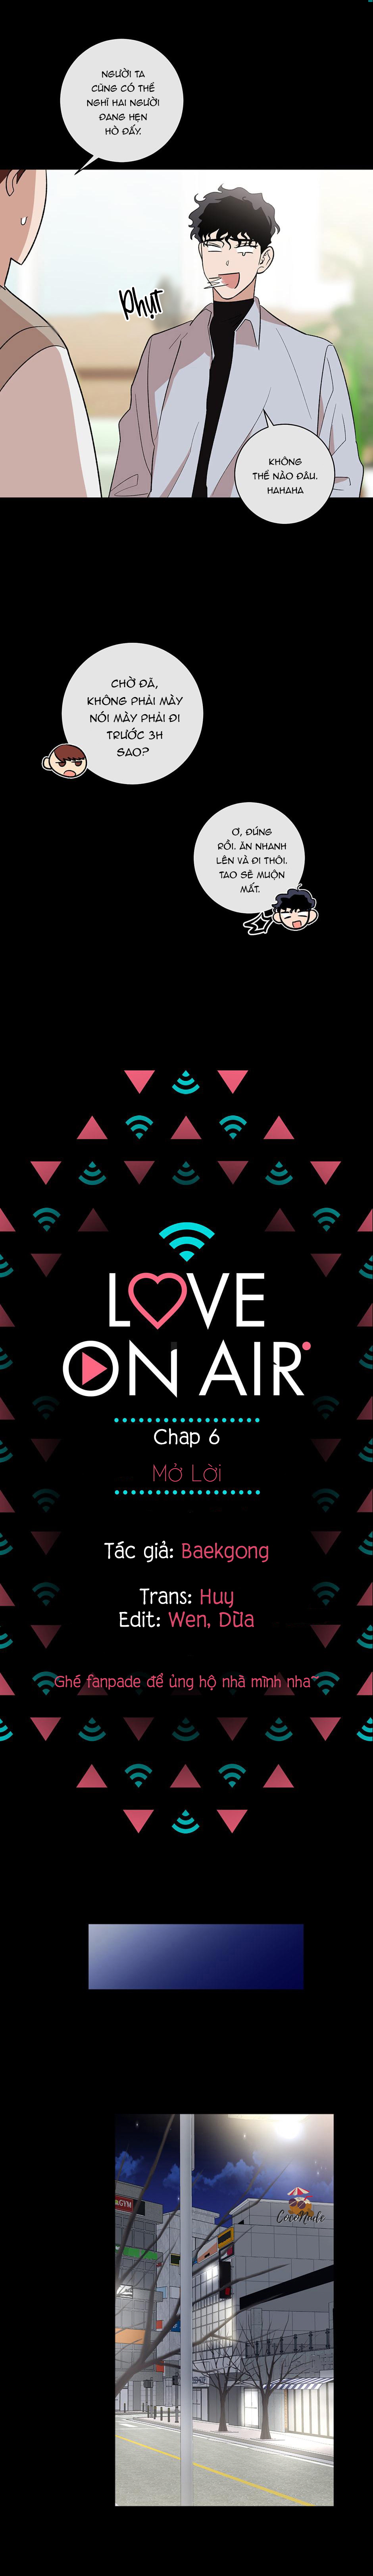 love-on-air-chap-6-5